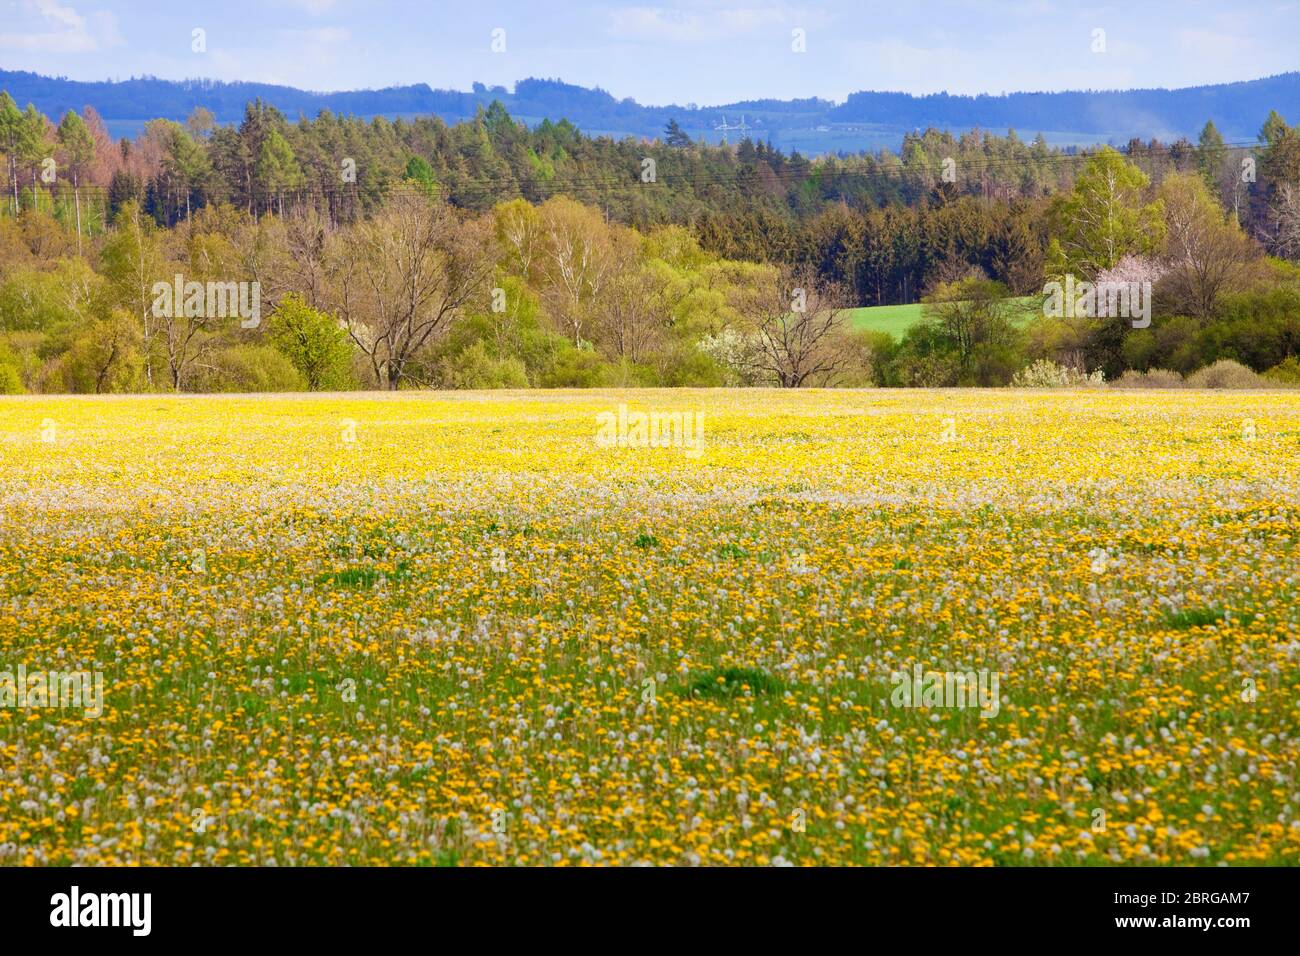 Název: Czech Republic, South Bohemia - Landscape with meadow of dandelions. Stock Photo